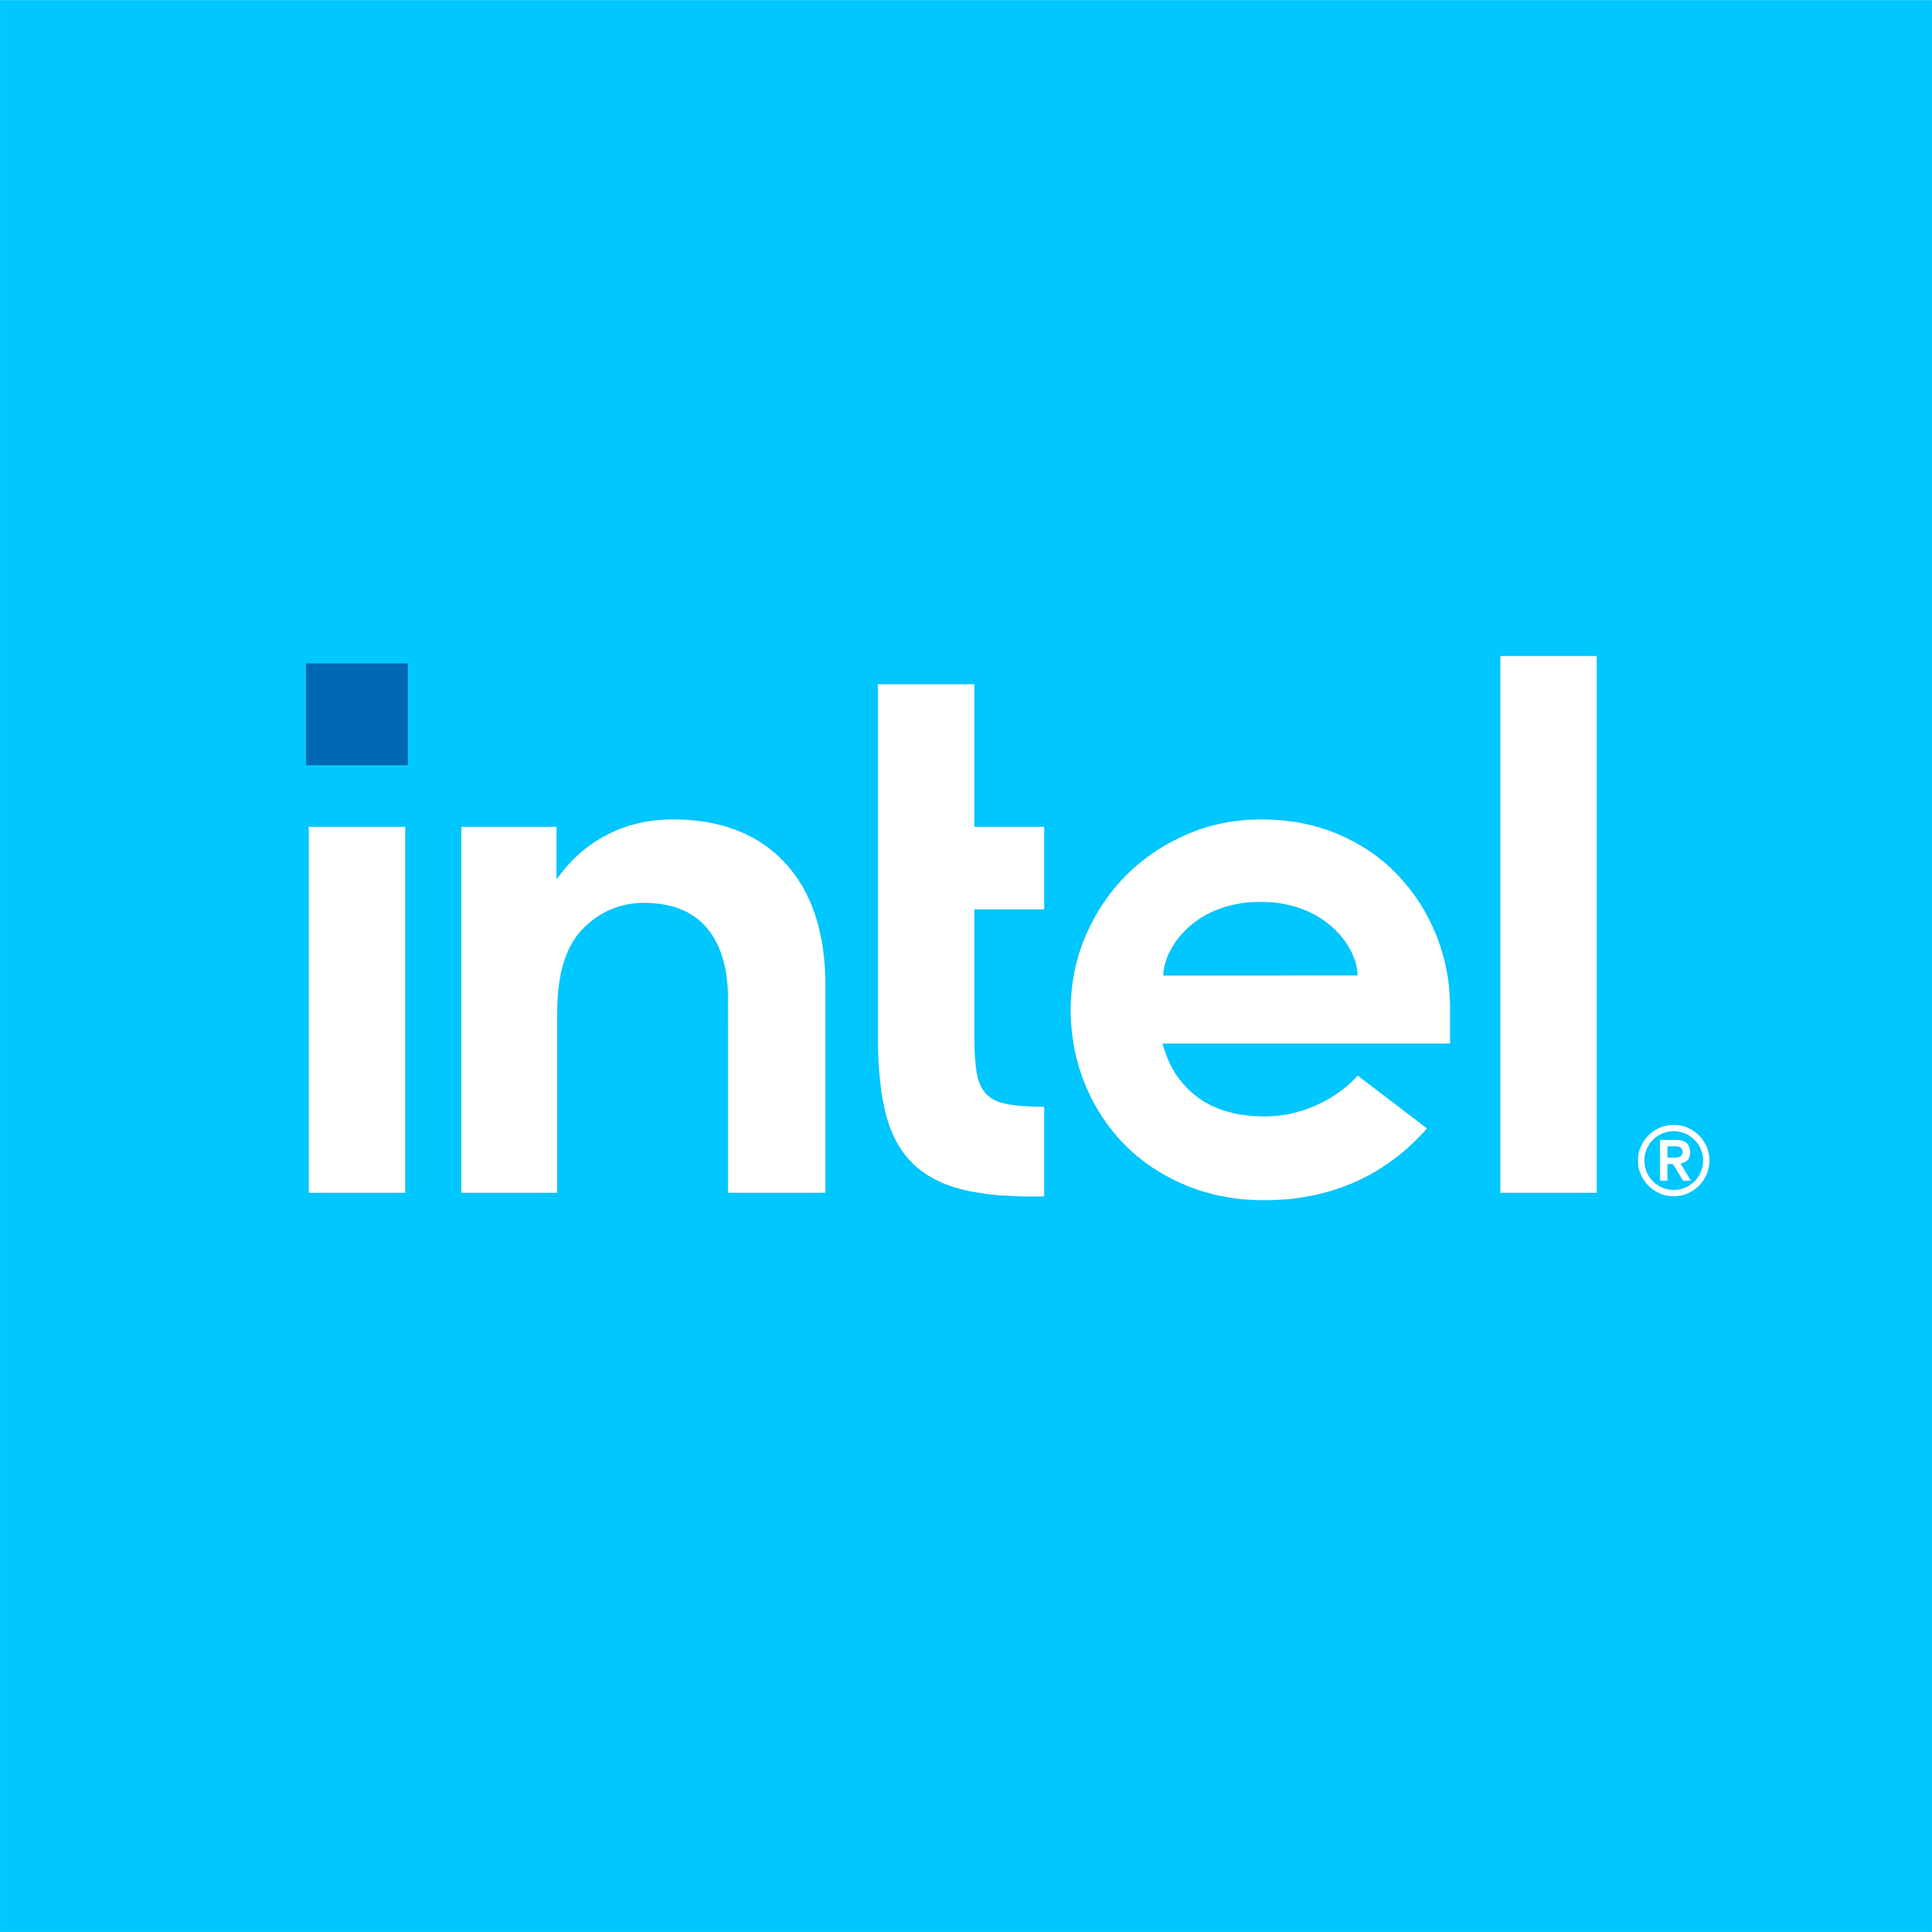 Intel Products Vietnam